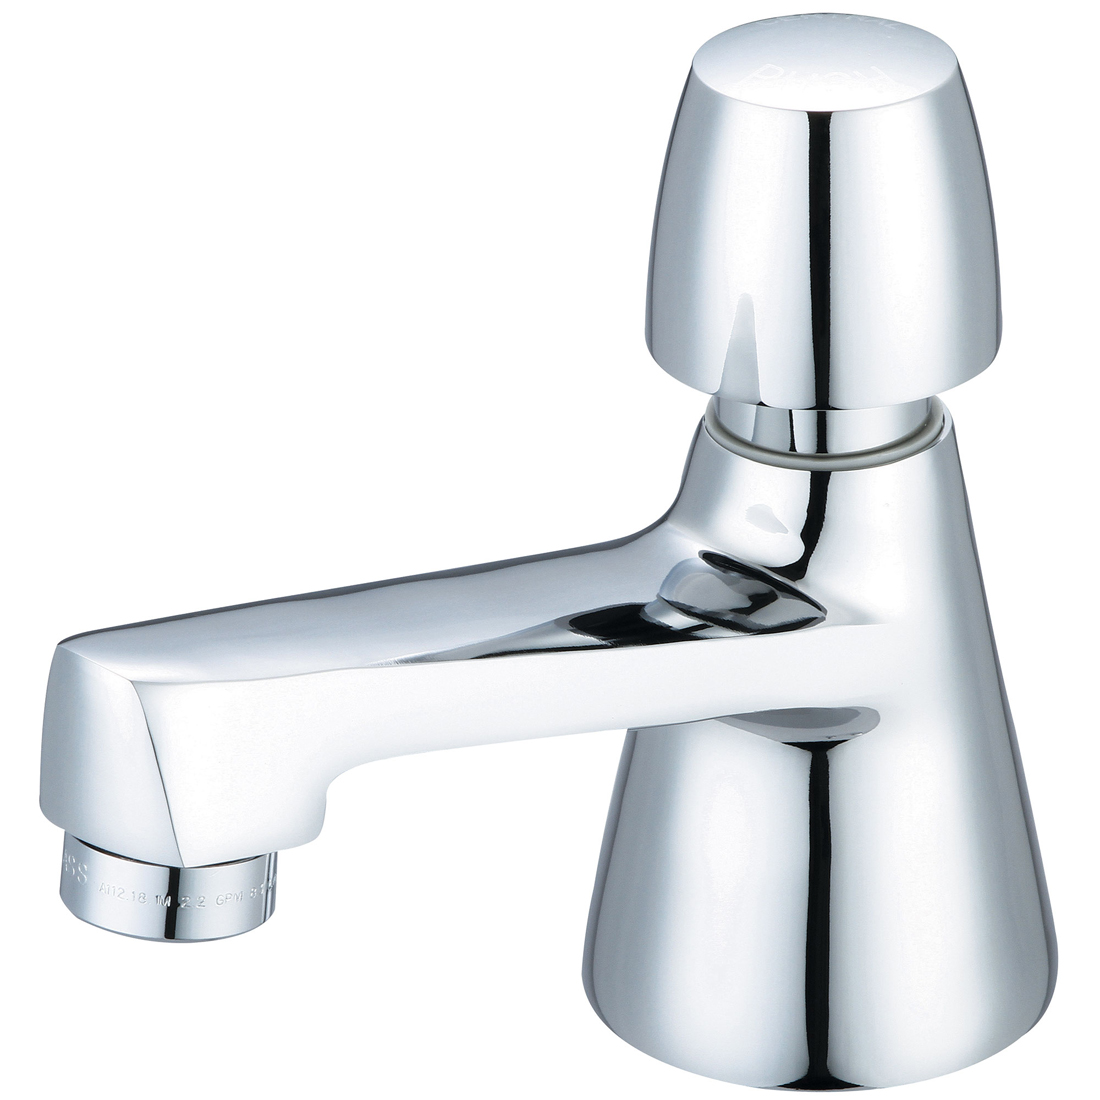 Slow-Close Single Handle Basin Faucet Model #0355-AN2P